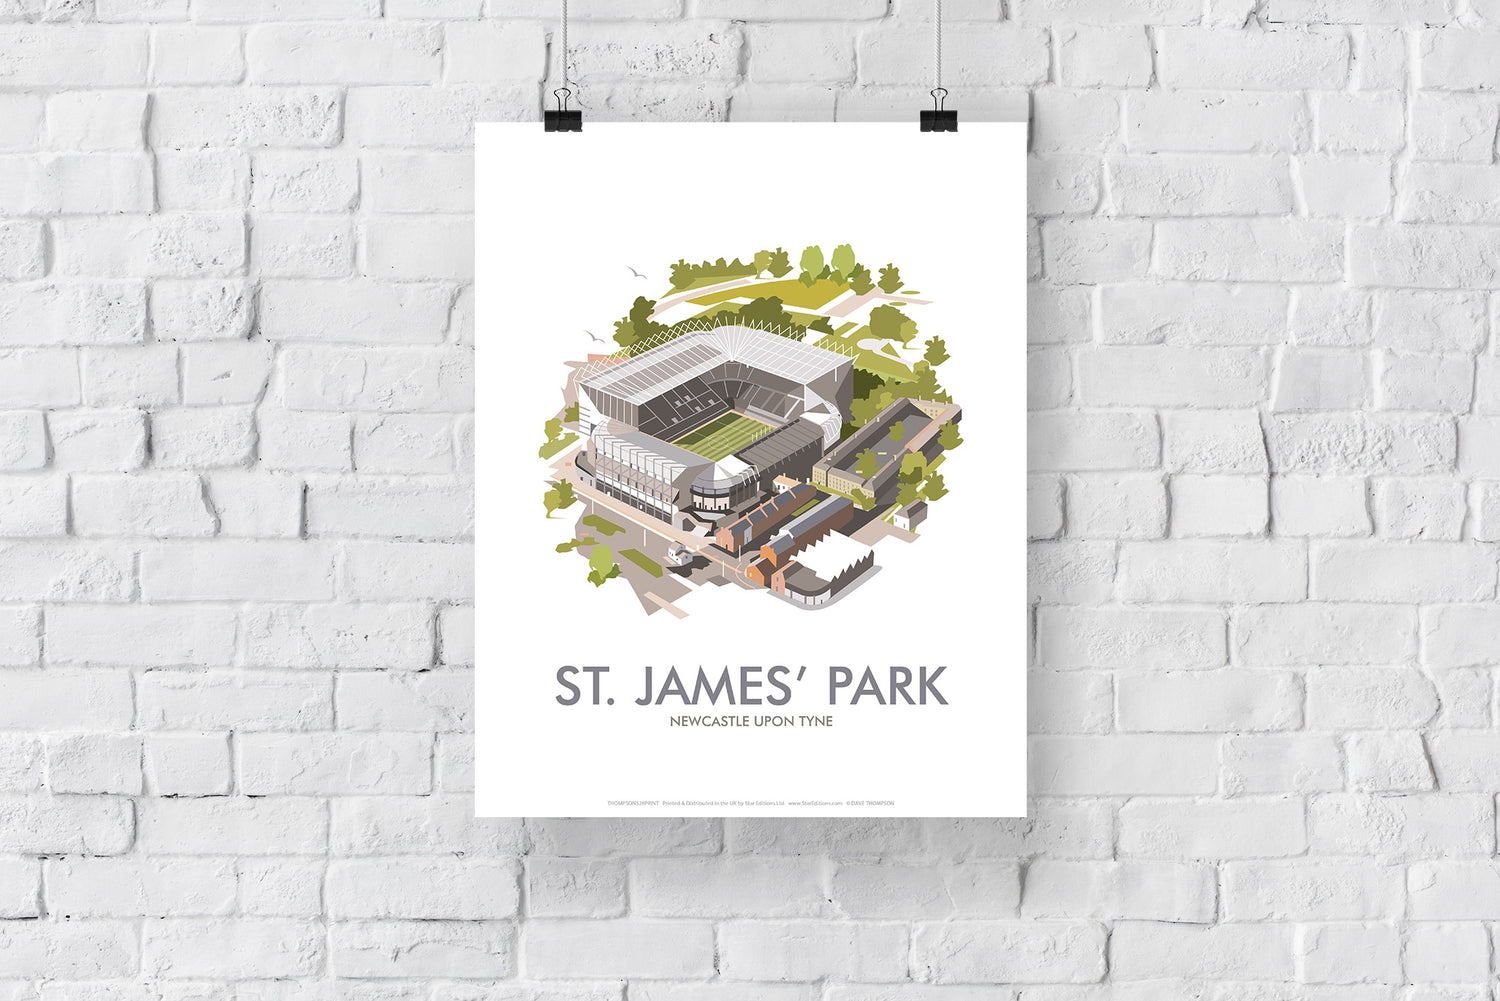 St James Park, Newcastle Upon Tyne - Art Print